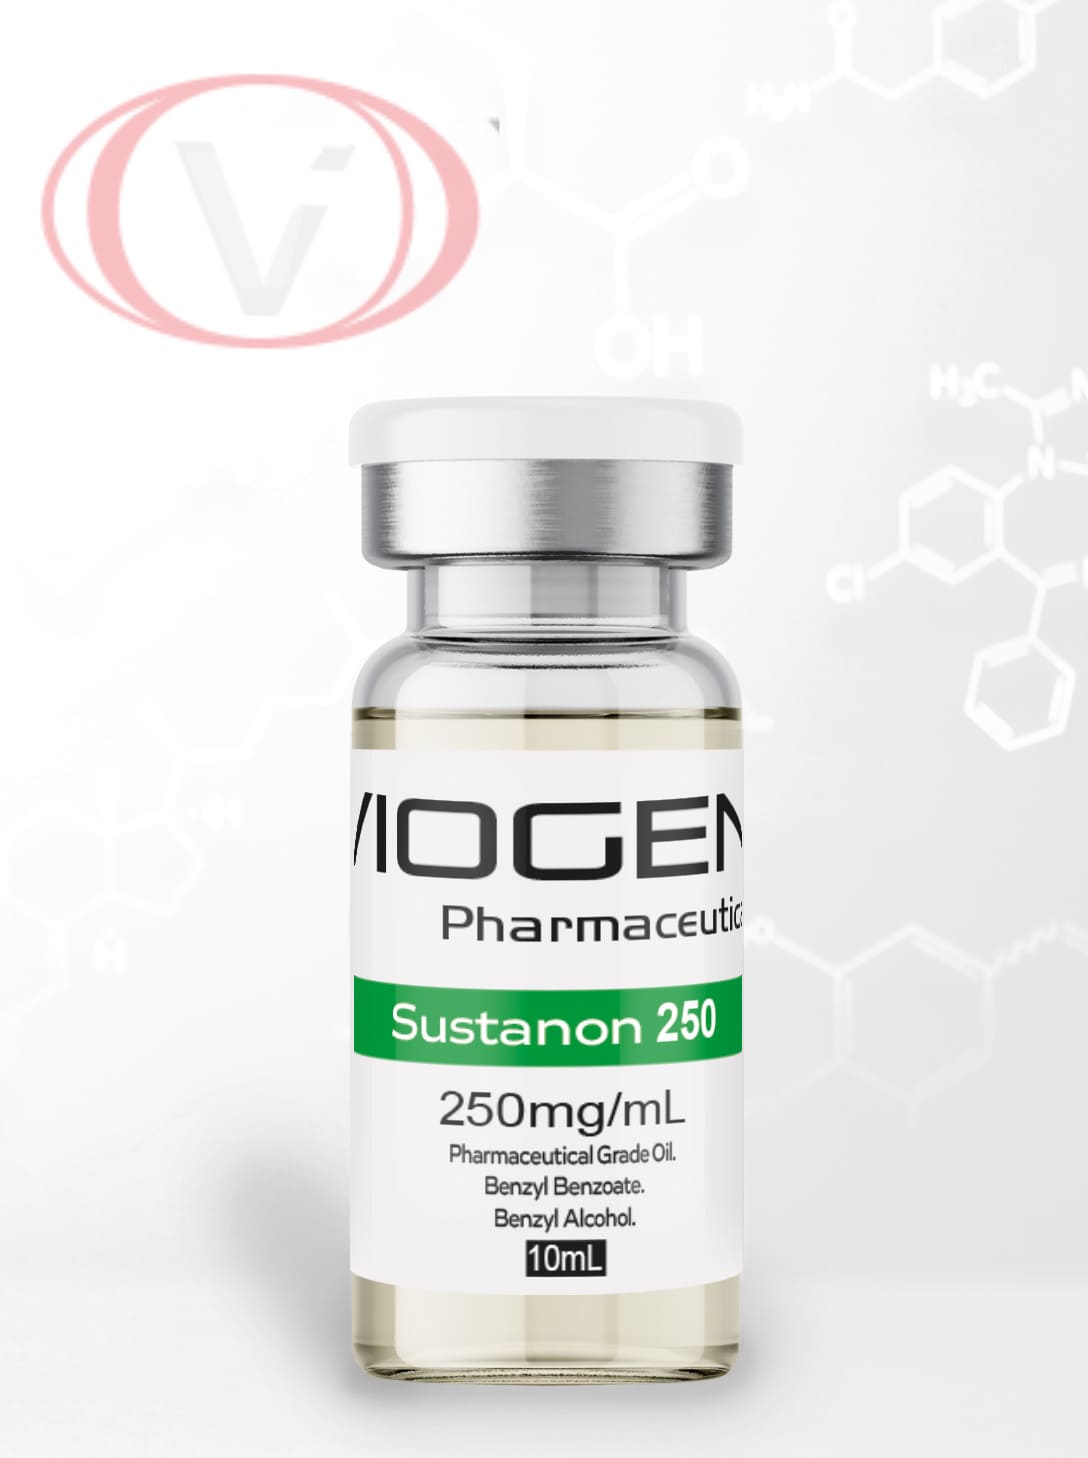 Sustanon 250 Mg 10 Ml Viogen Pharma